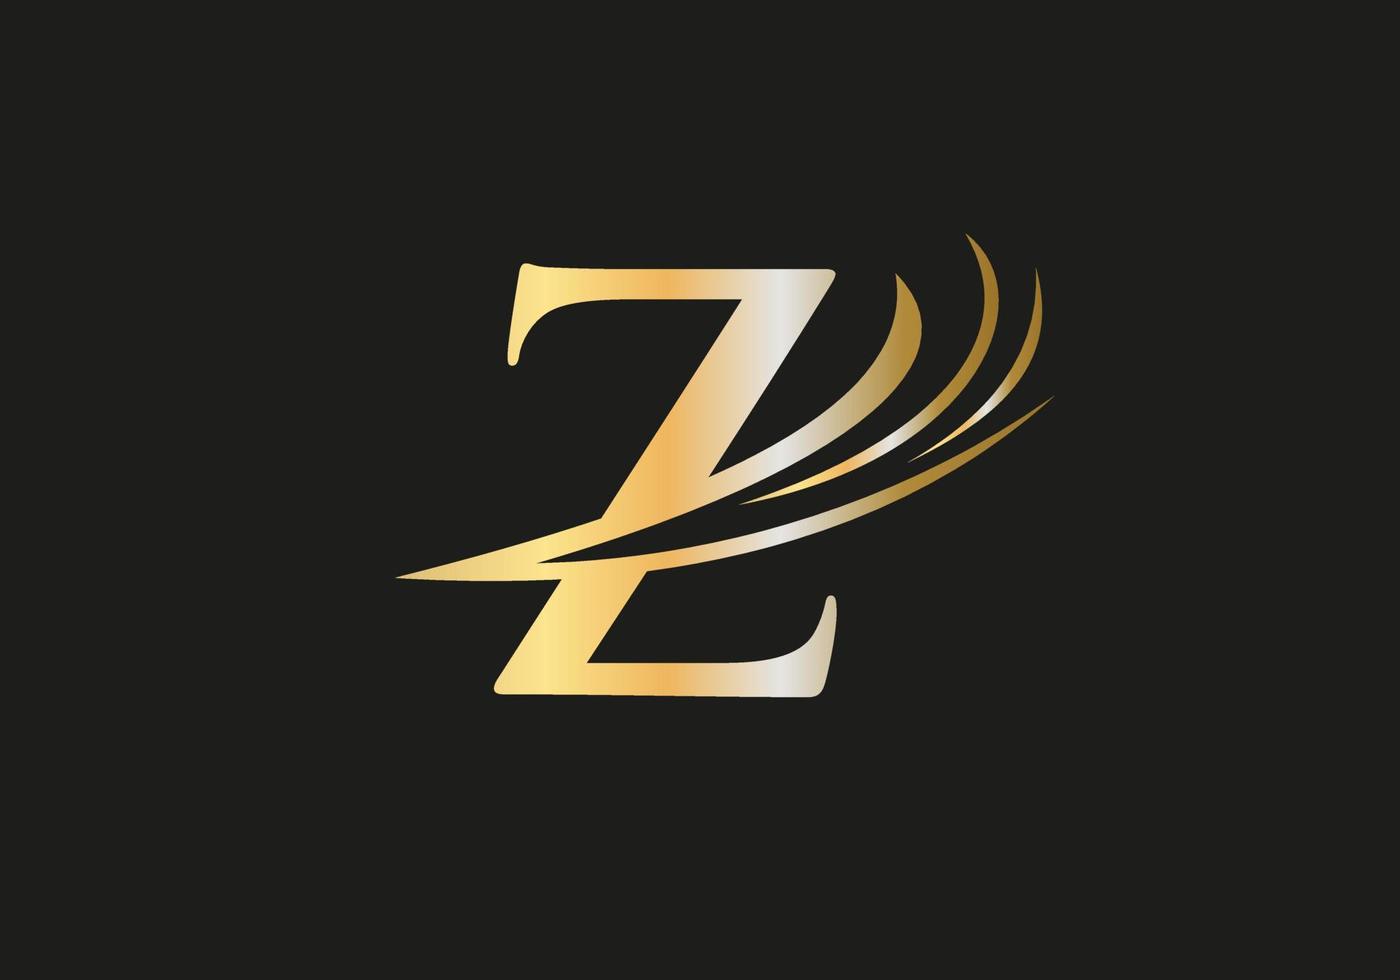 Monogram Z logo design vector template